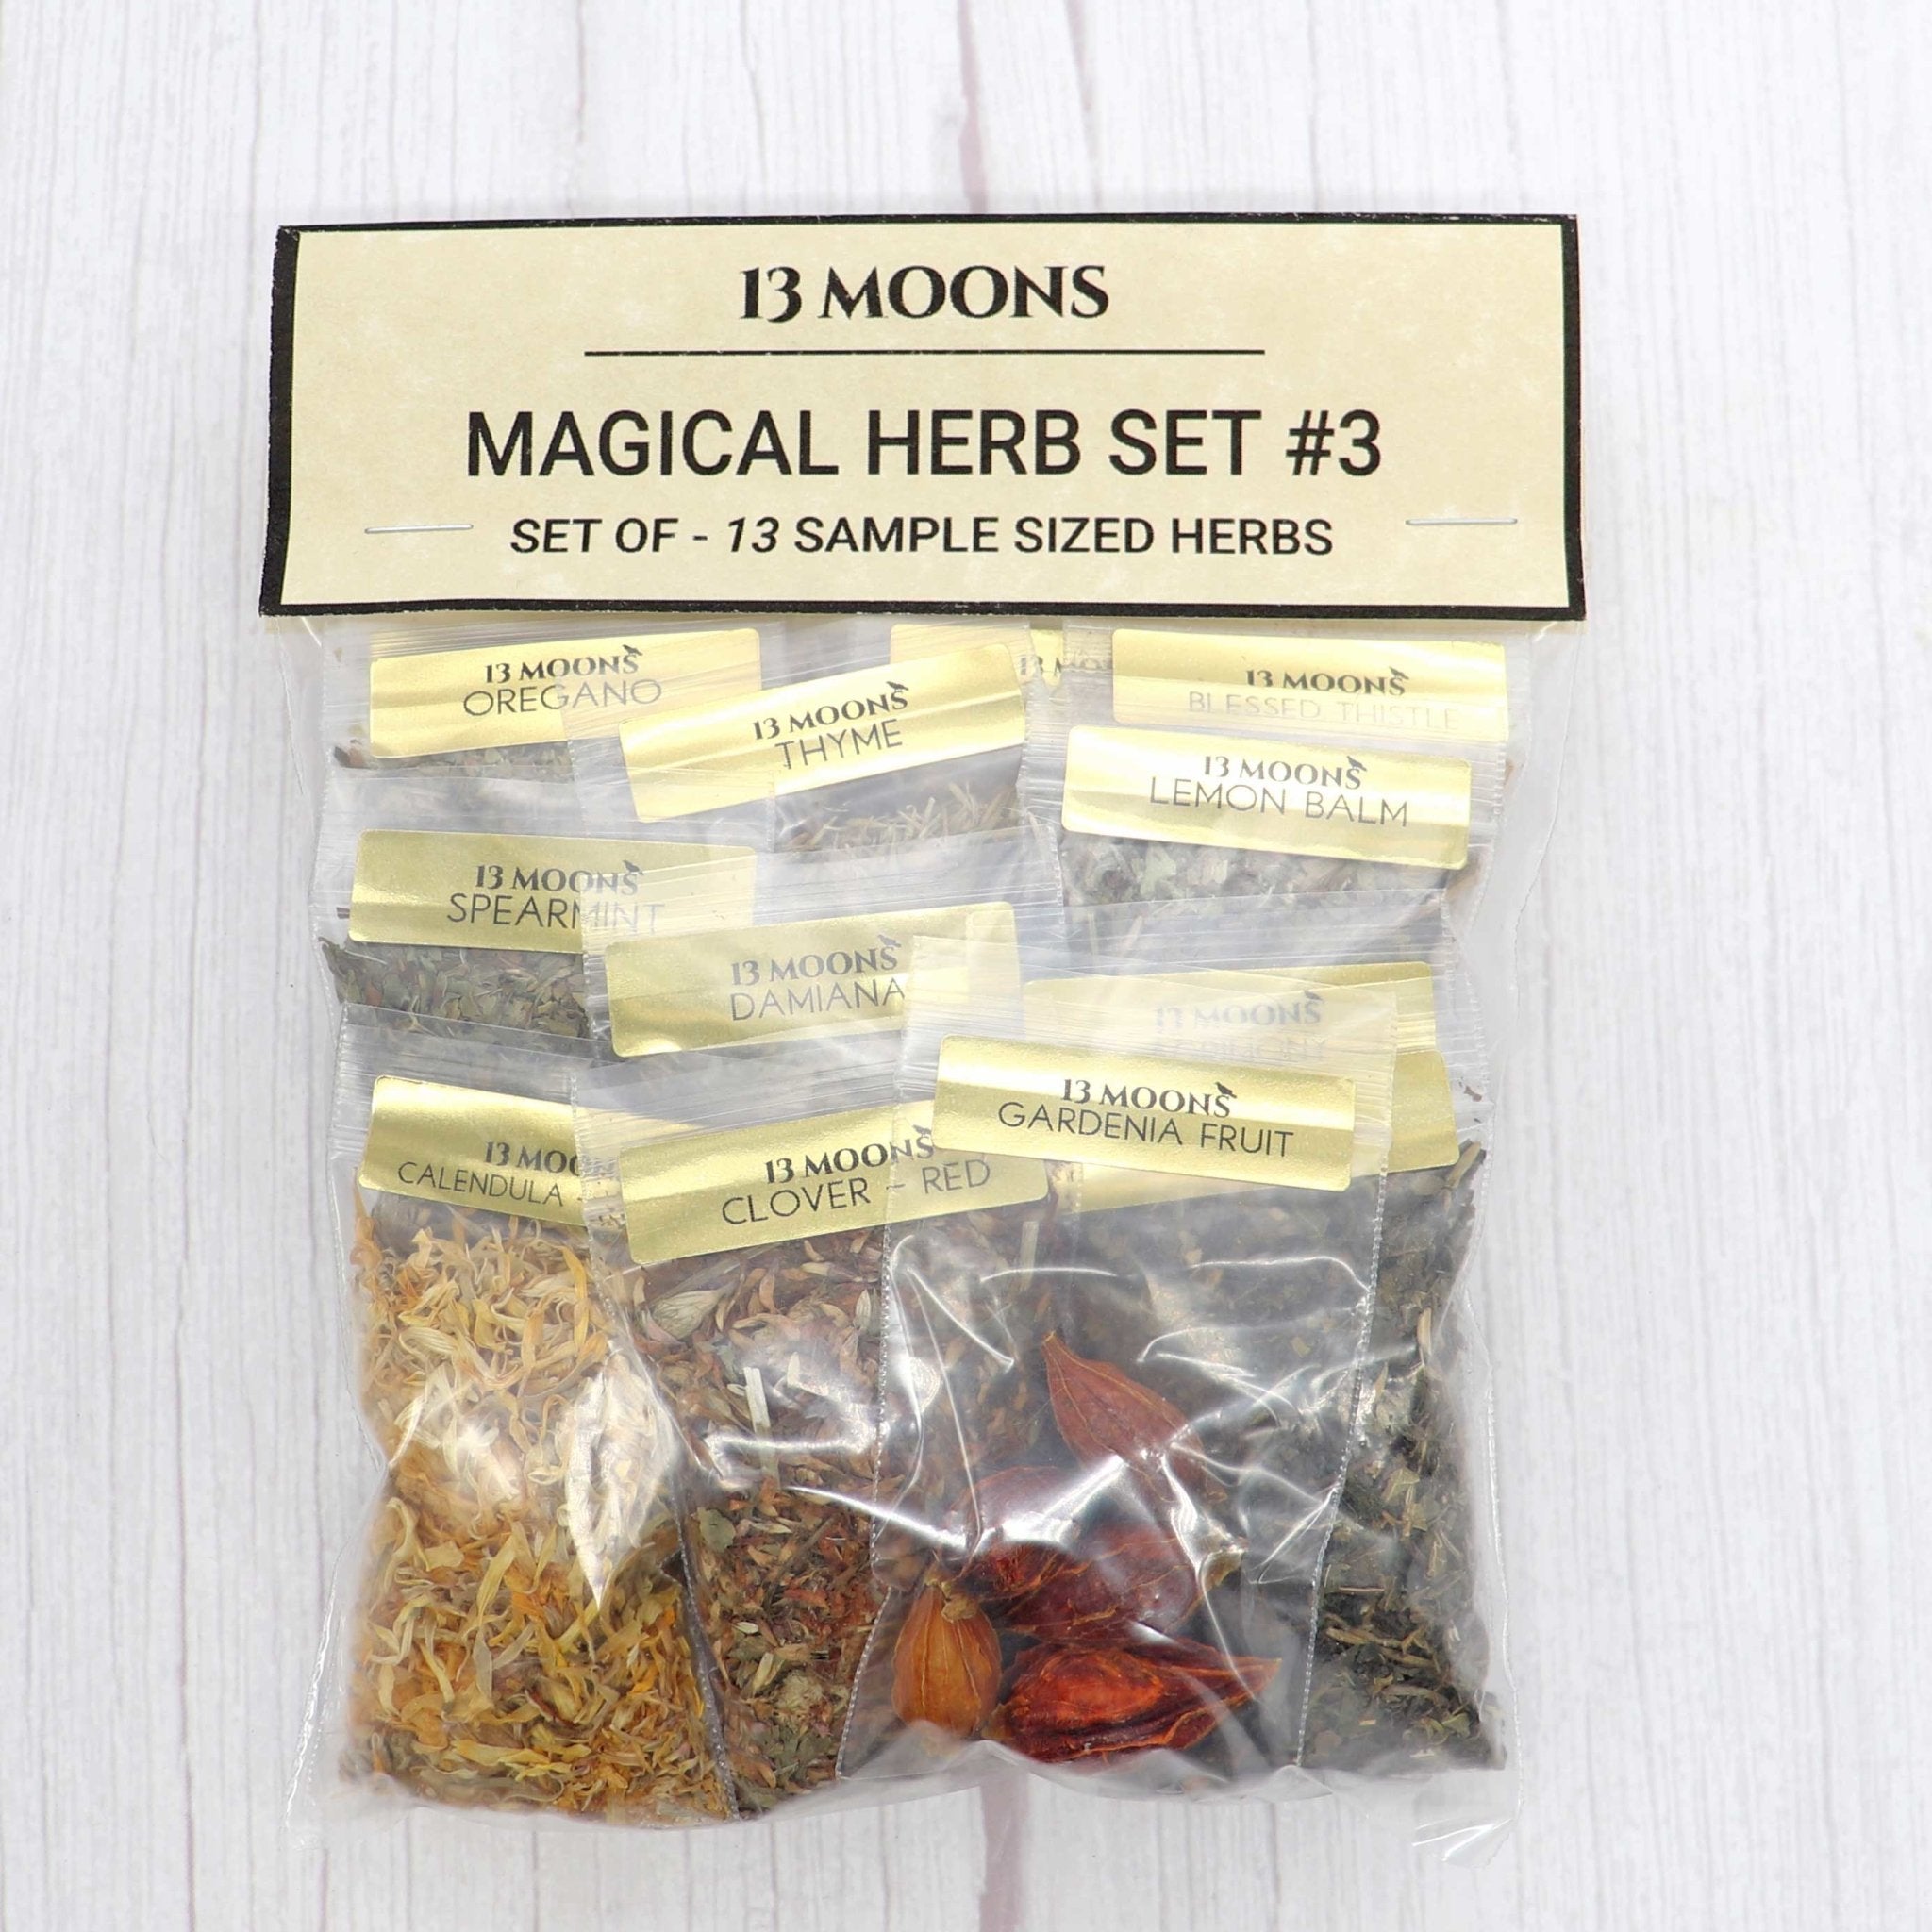 Magical Herb Set #3 - 13 Moons